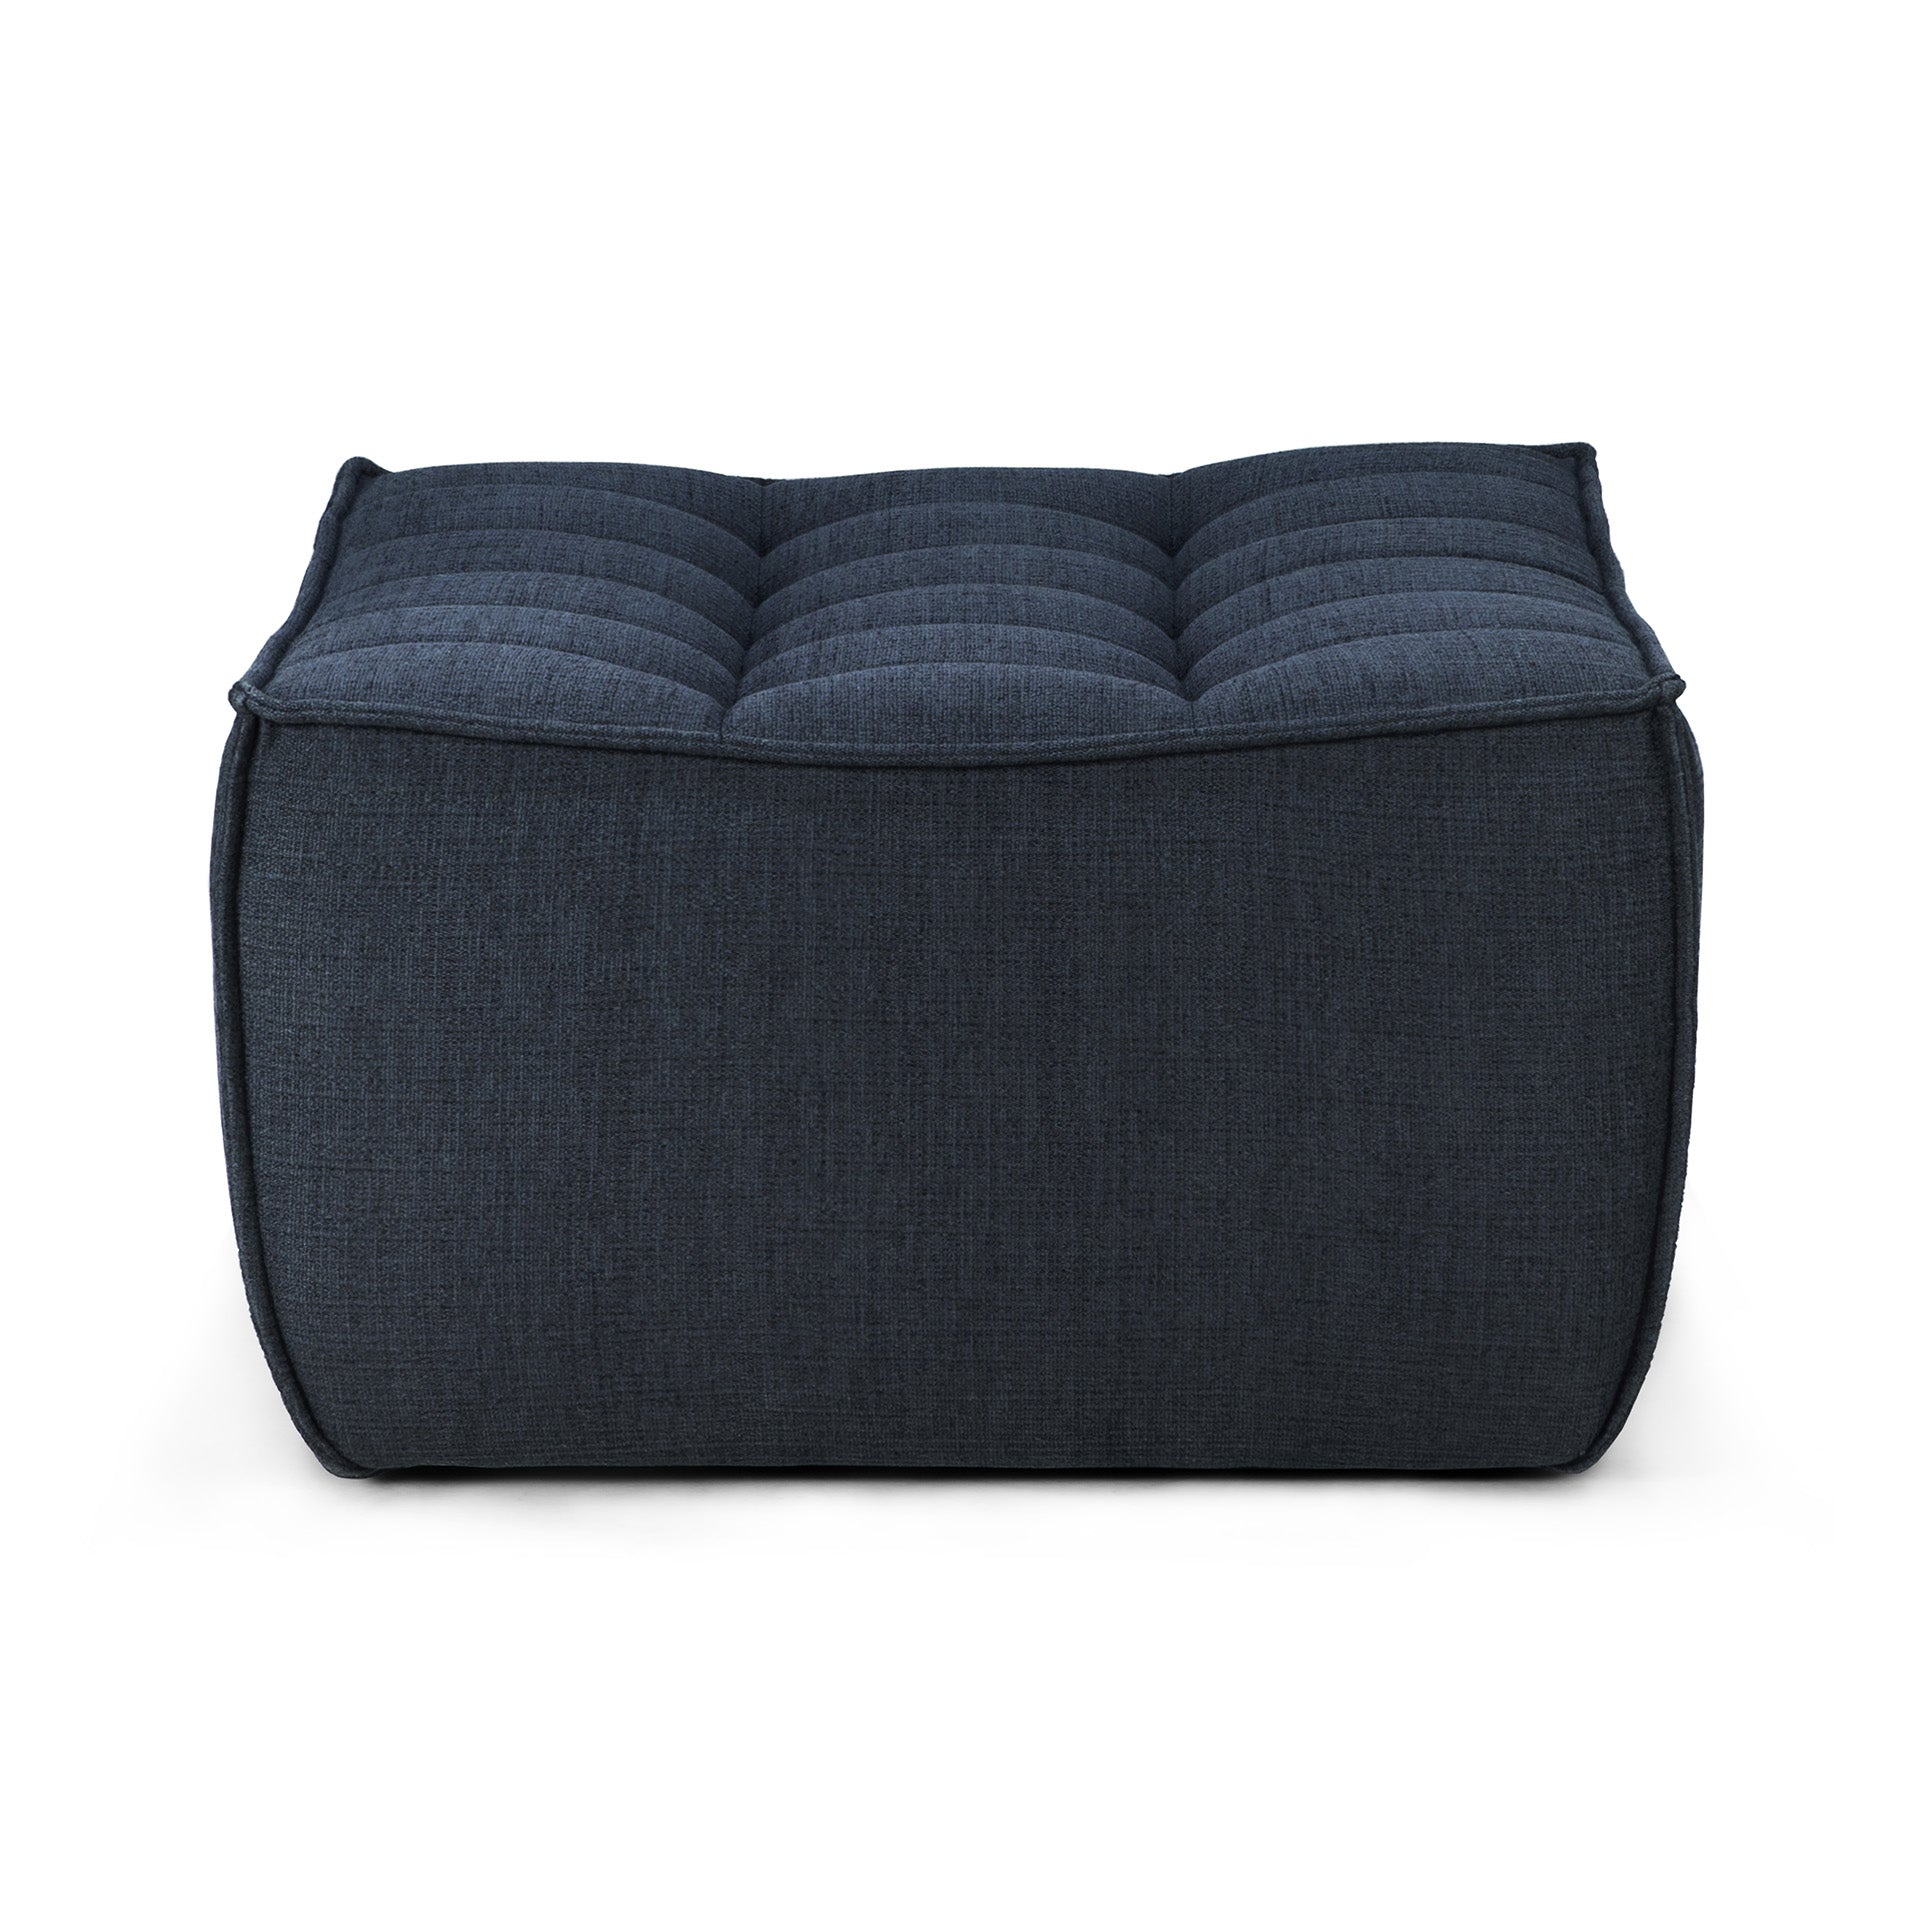 N701 Eco Fabric Footstool, Graphite